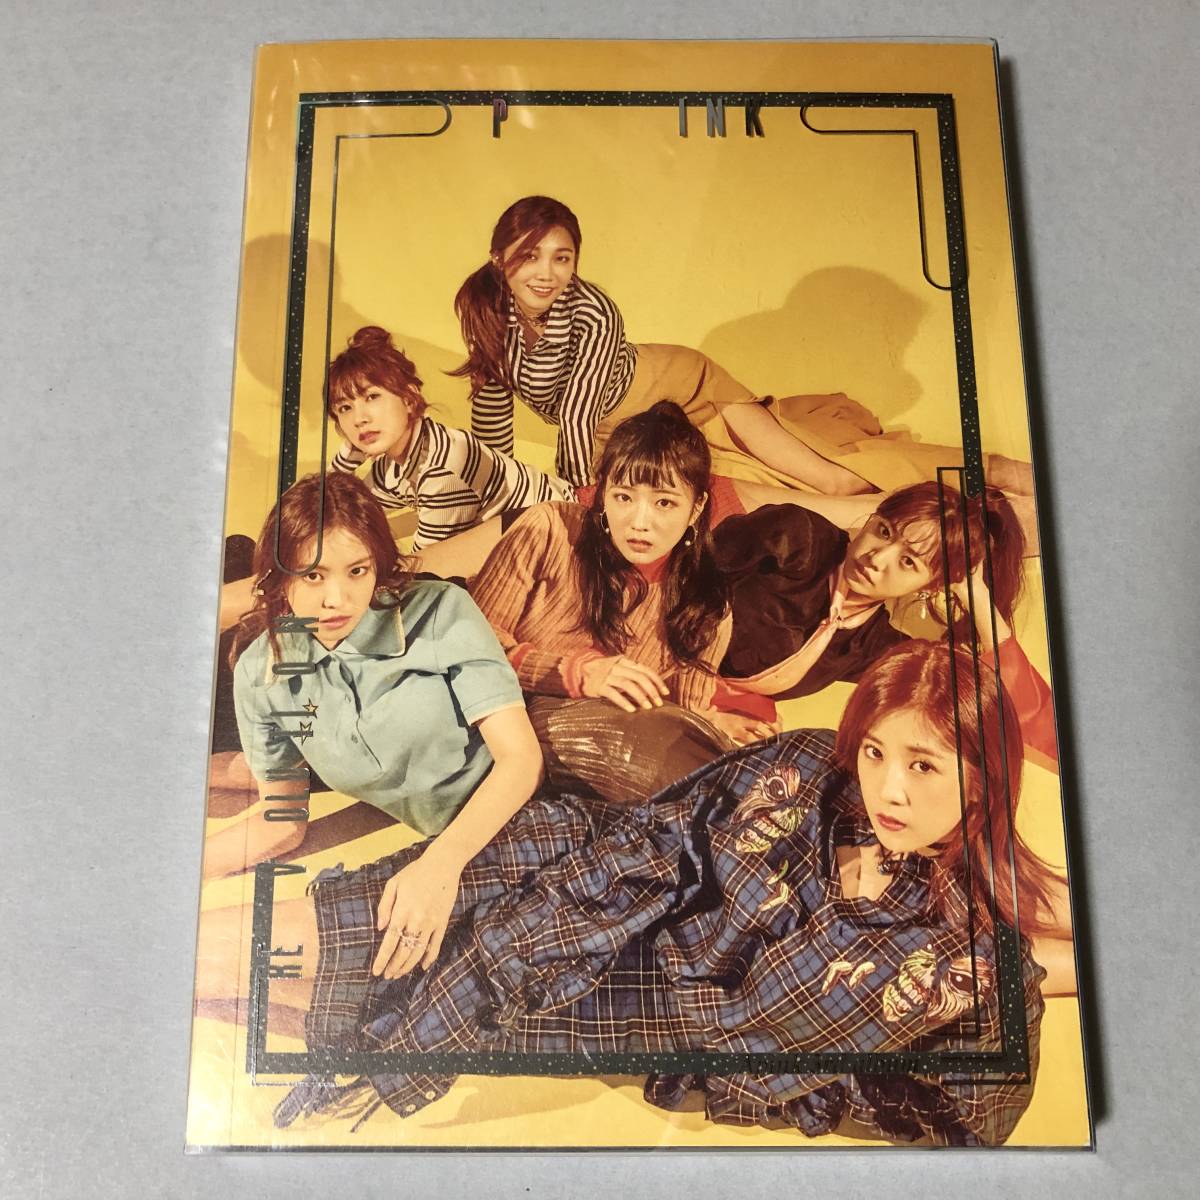 Apink 3集 CD 韓国 アイドル ポップス K-POP apk716 _画像1